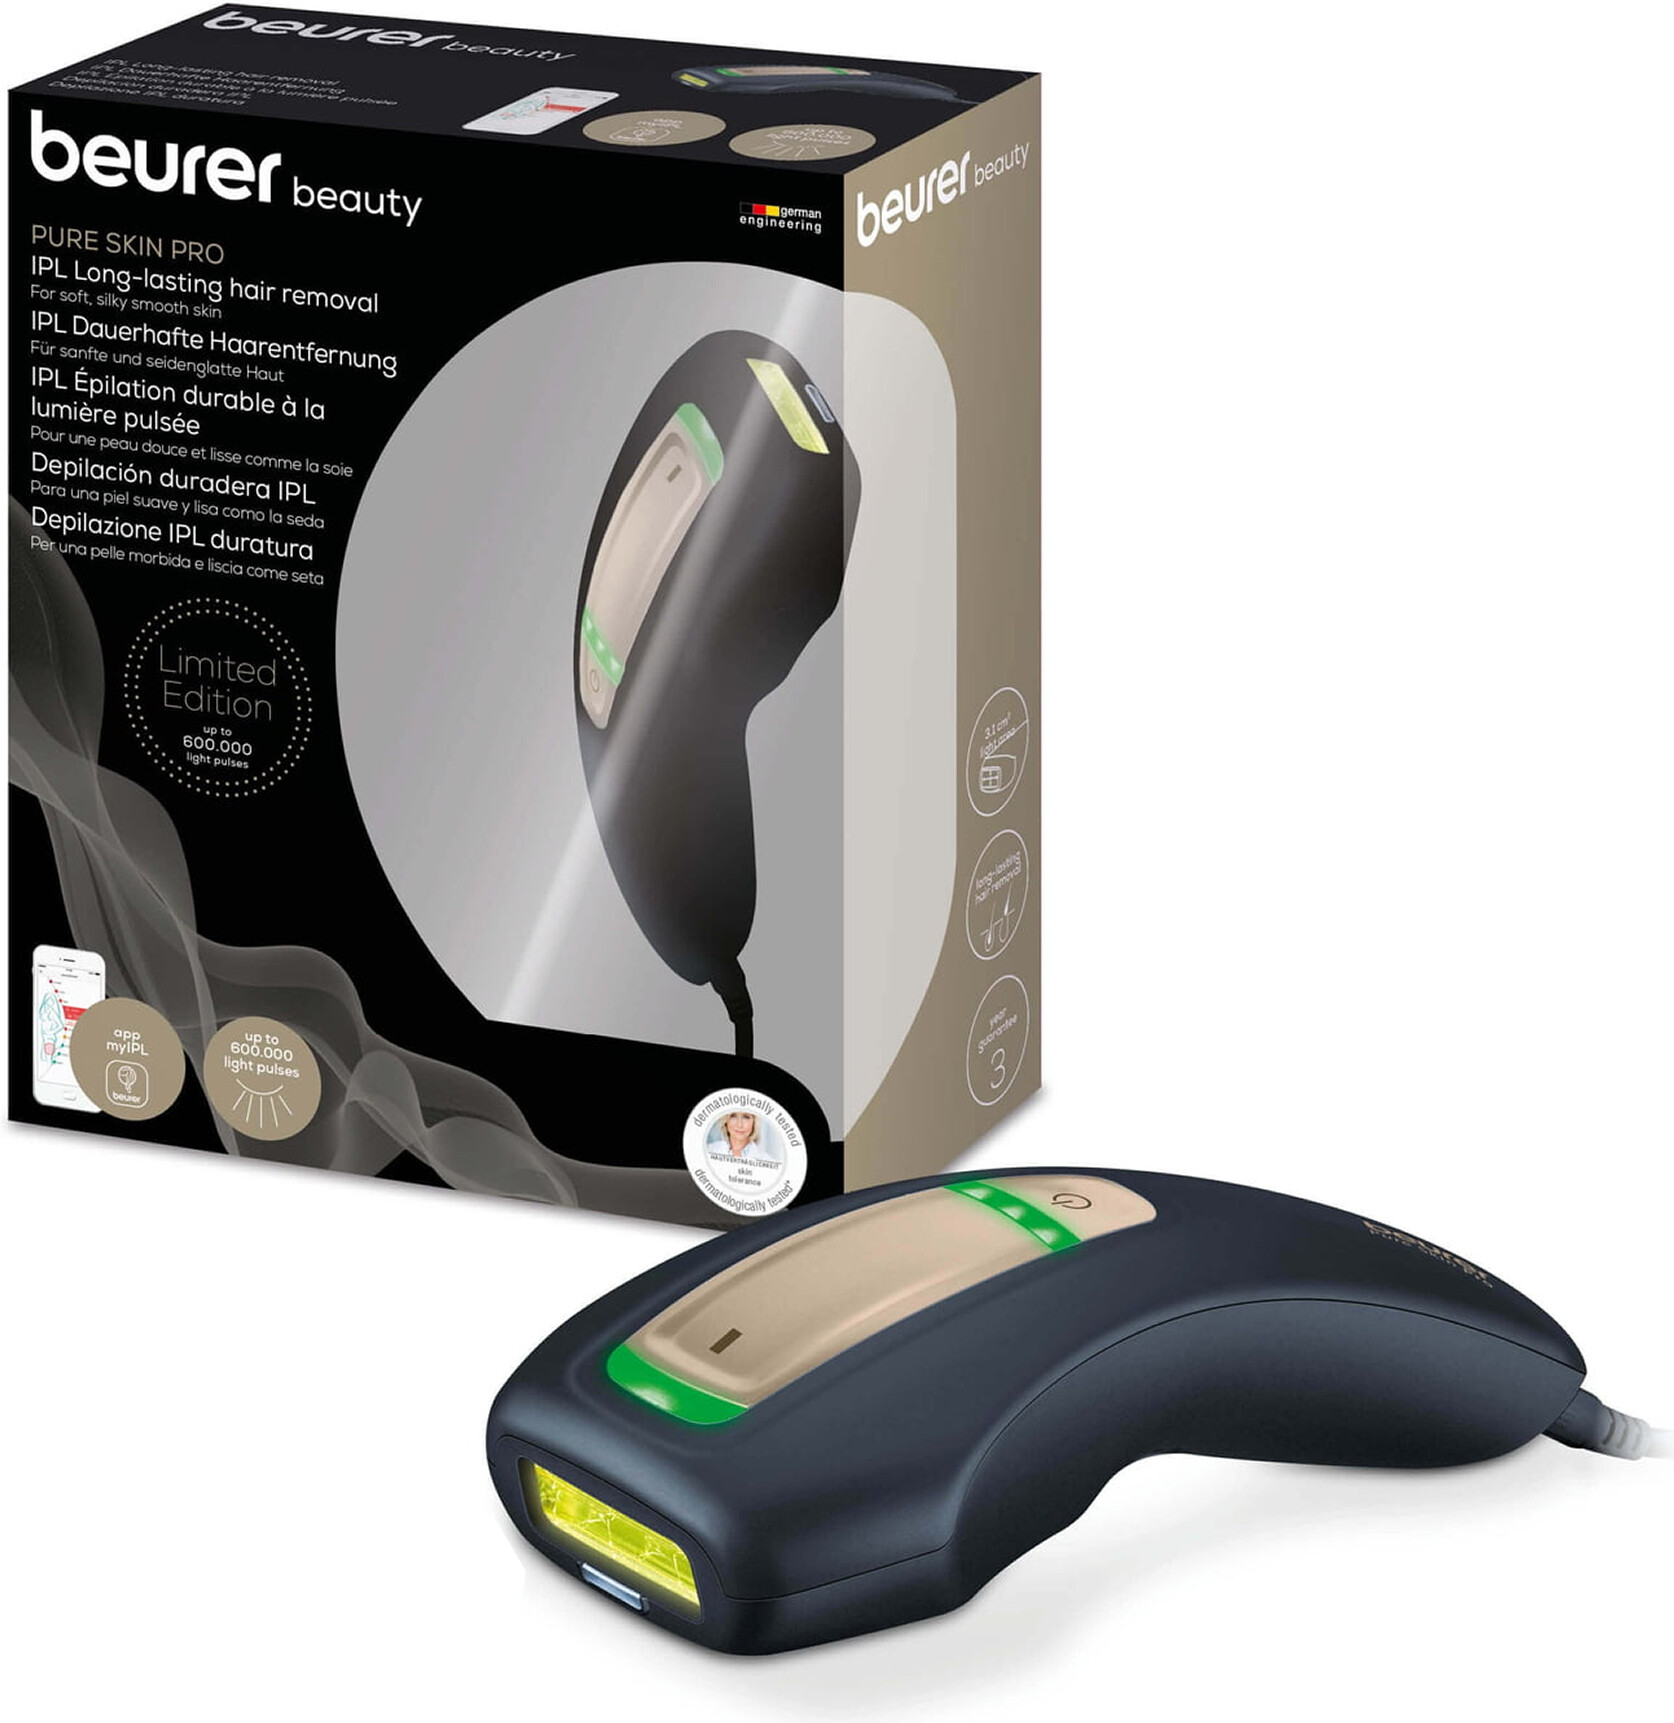 Beurer Pure Skin Pro IPL 5800